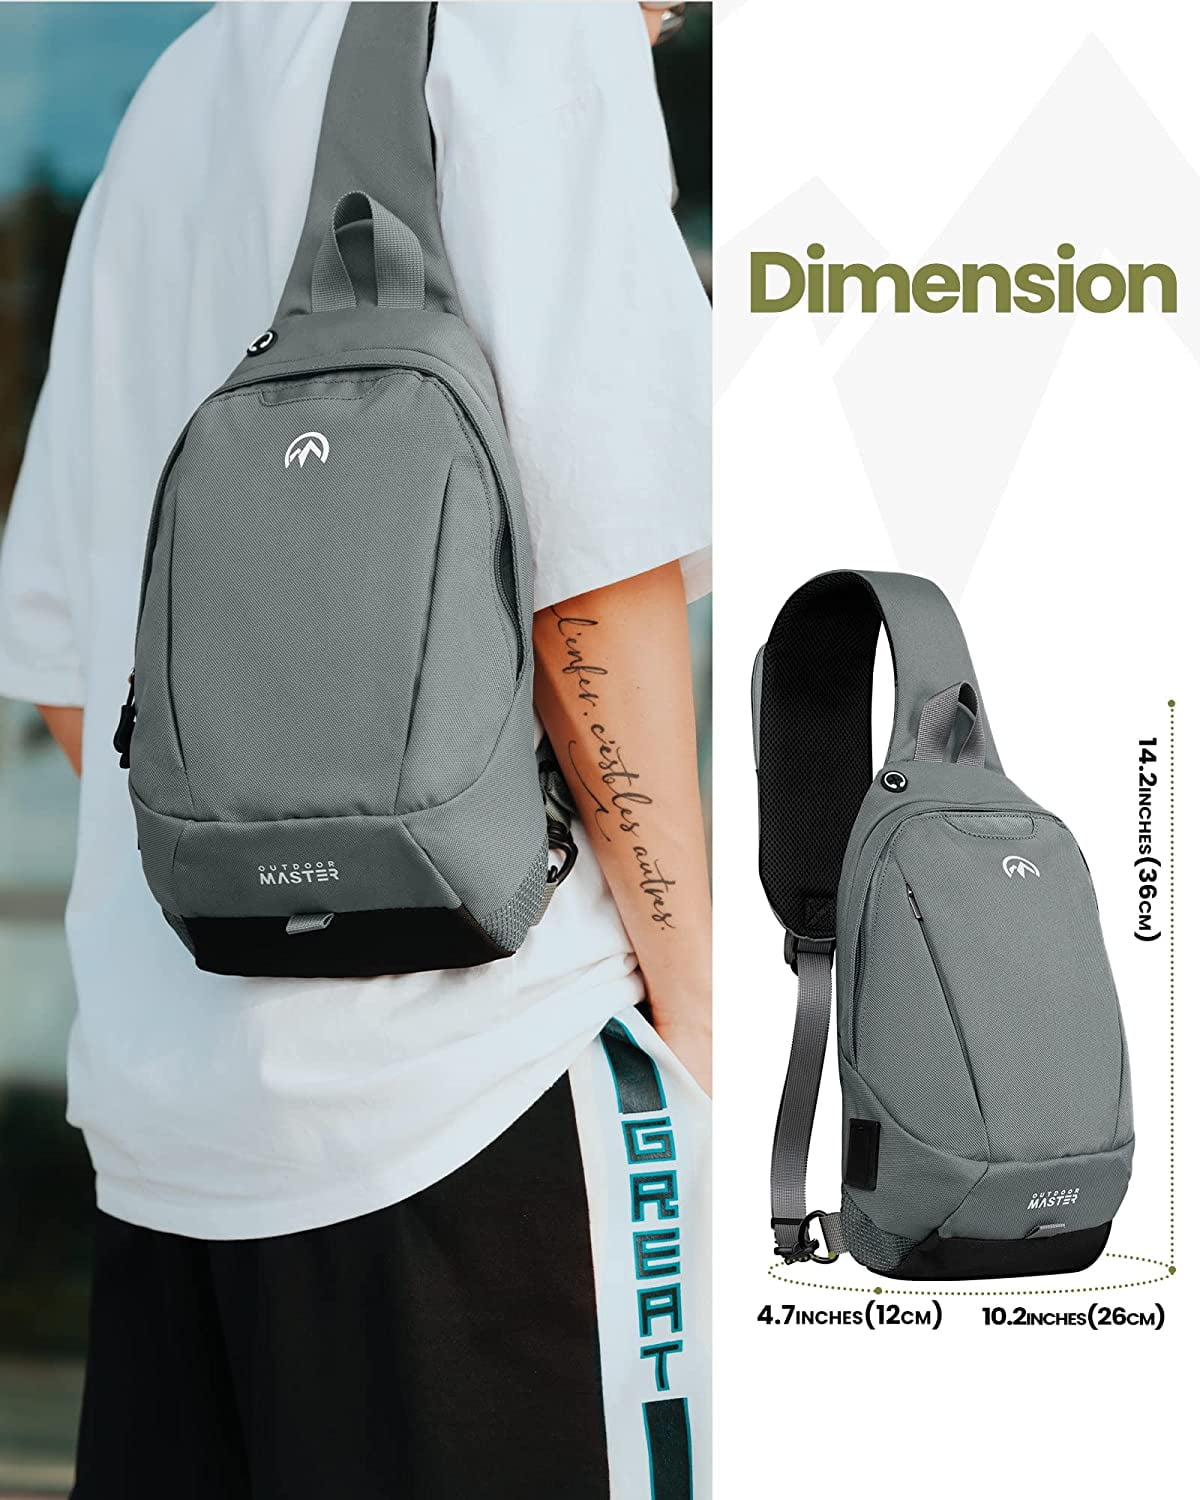 OutdoorMaster Sling Bag - Crossbody Backpack for Women & Men Gray